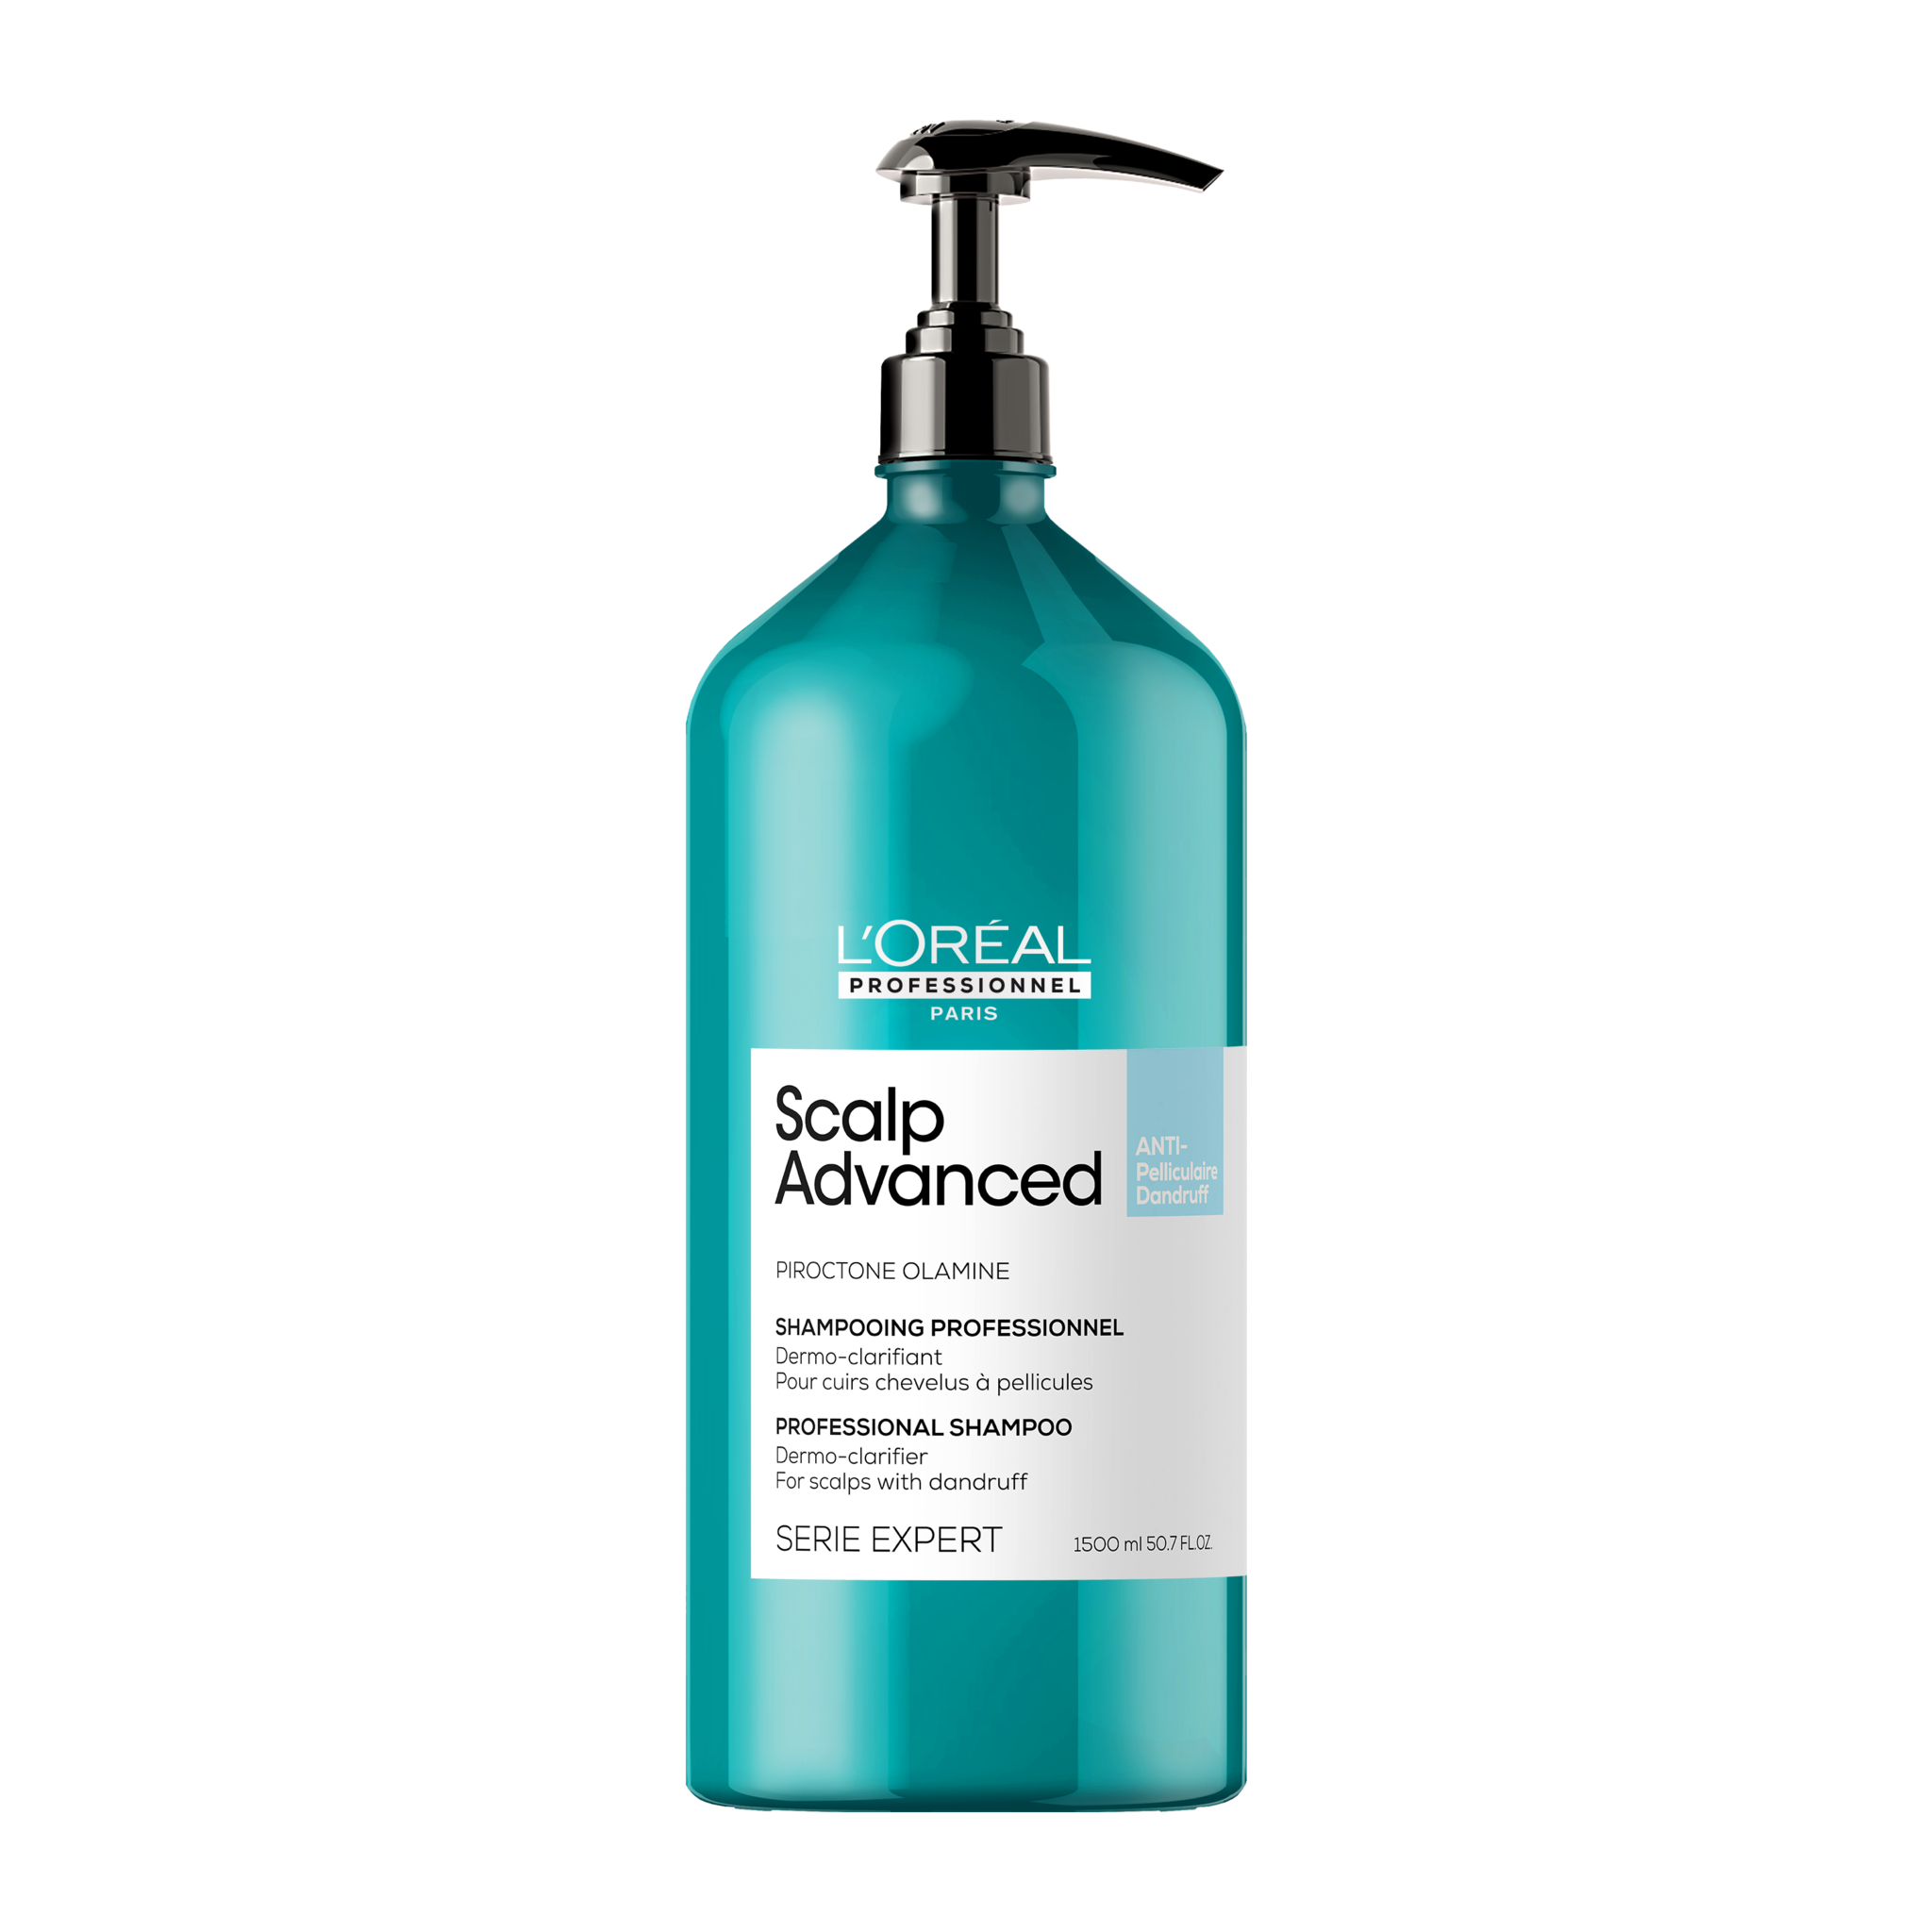 Horn konstruktion stimulere L'Oreal Scalp Advanced Anti-Dandruff Dermo-clarifier shampoo kopen? -  Kappersshop